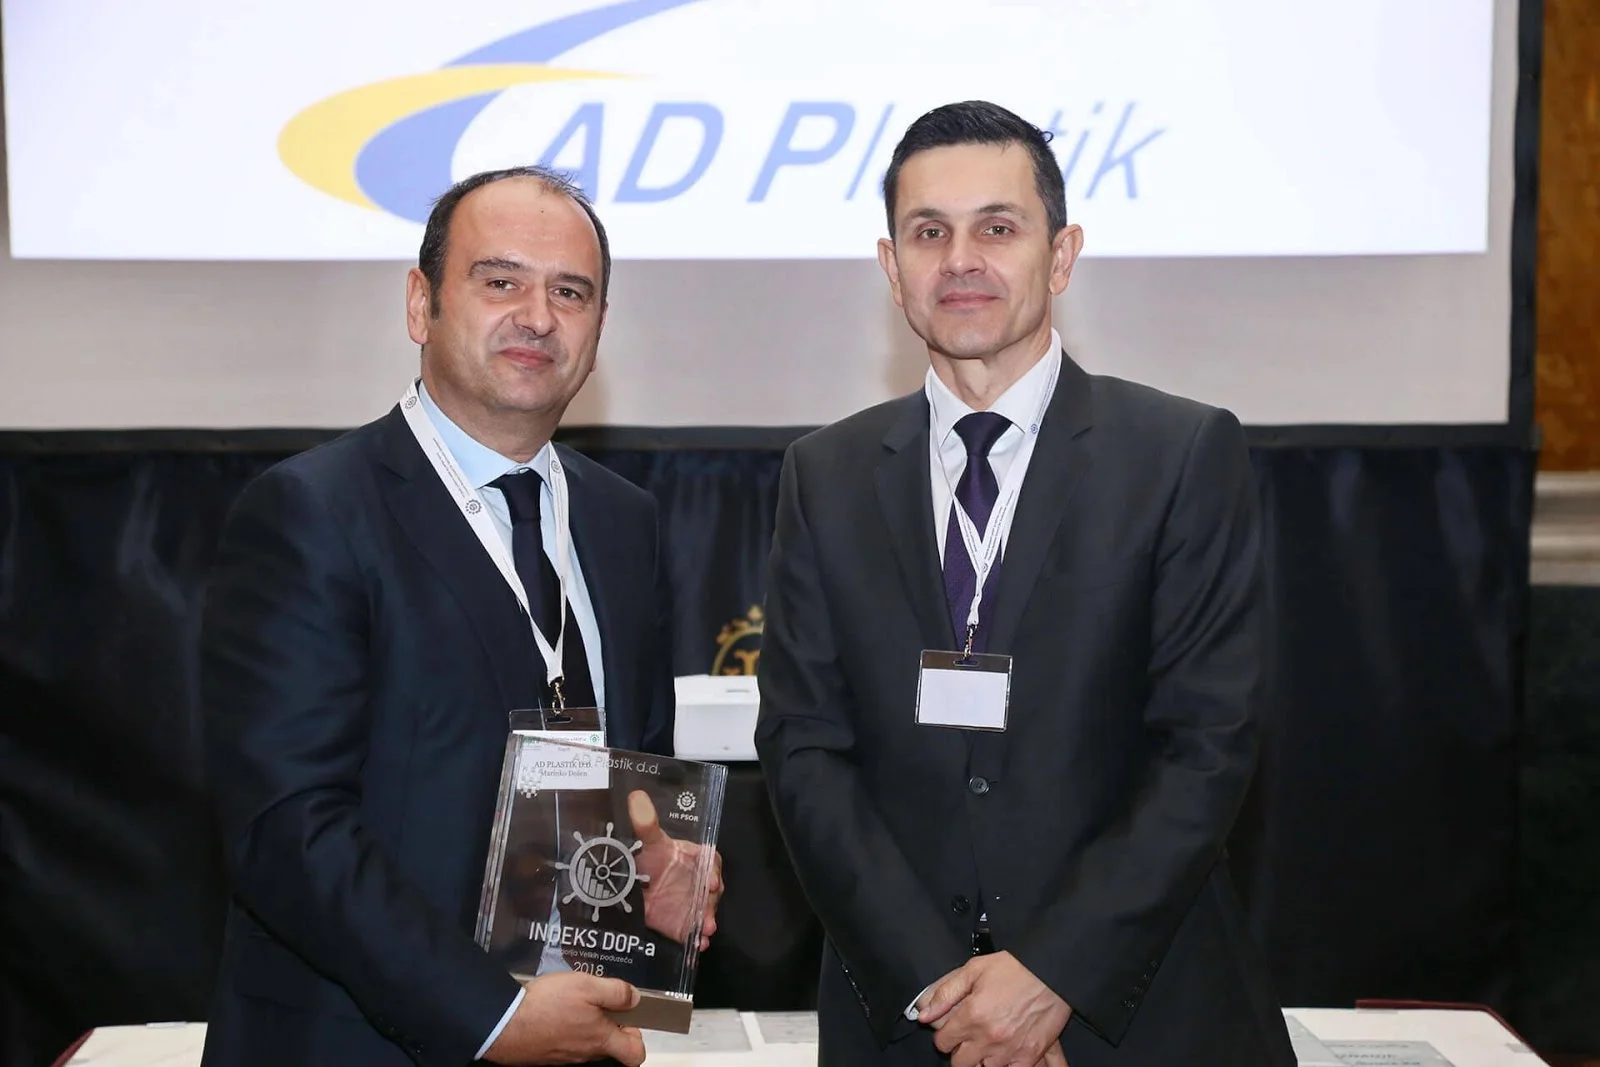 AD Plastik Group received the CSR Index award